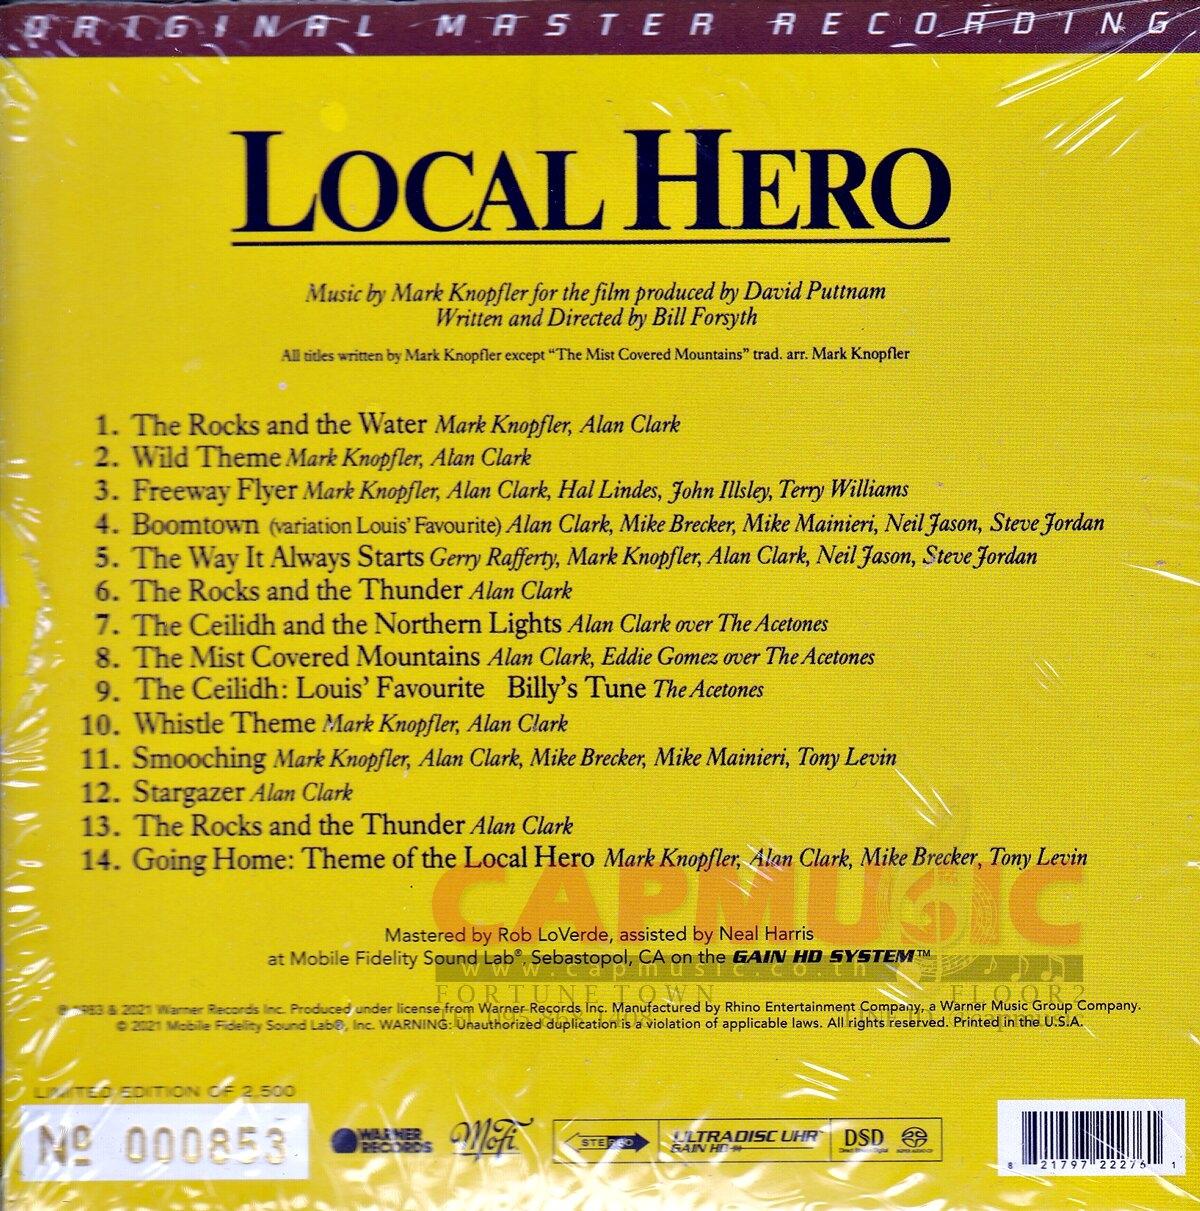 SACD Ost. Local Hero by Mark Knopfler (Hybrid/Stereo) - CAPMUSIC